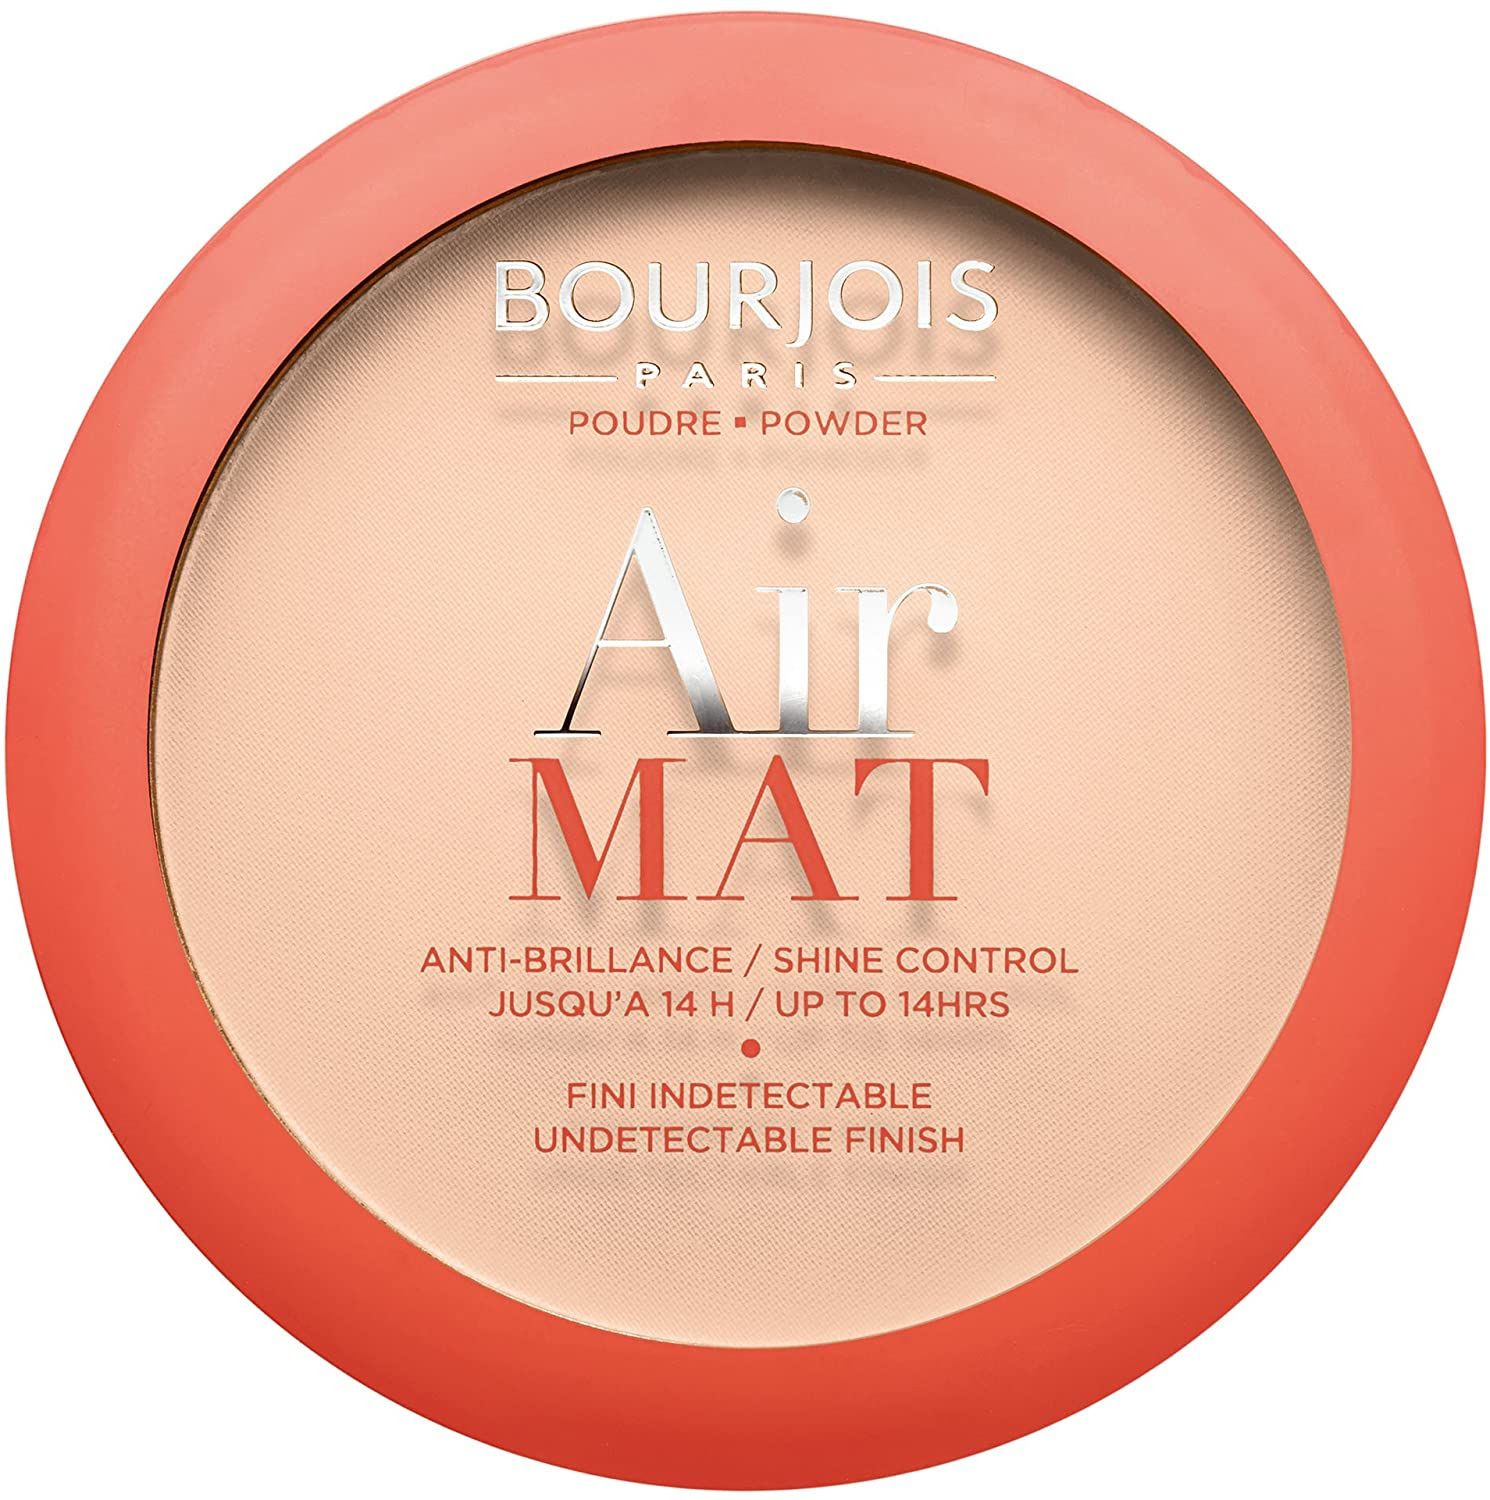 Bourjois Paris Air Mat Shine Control Compact Powder 10g - 01 Rose Ivory